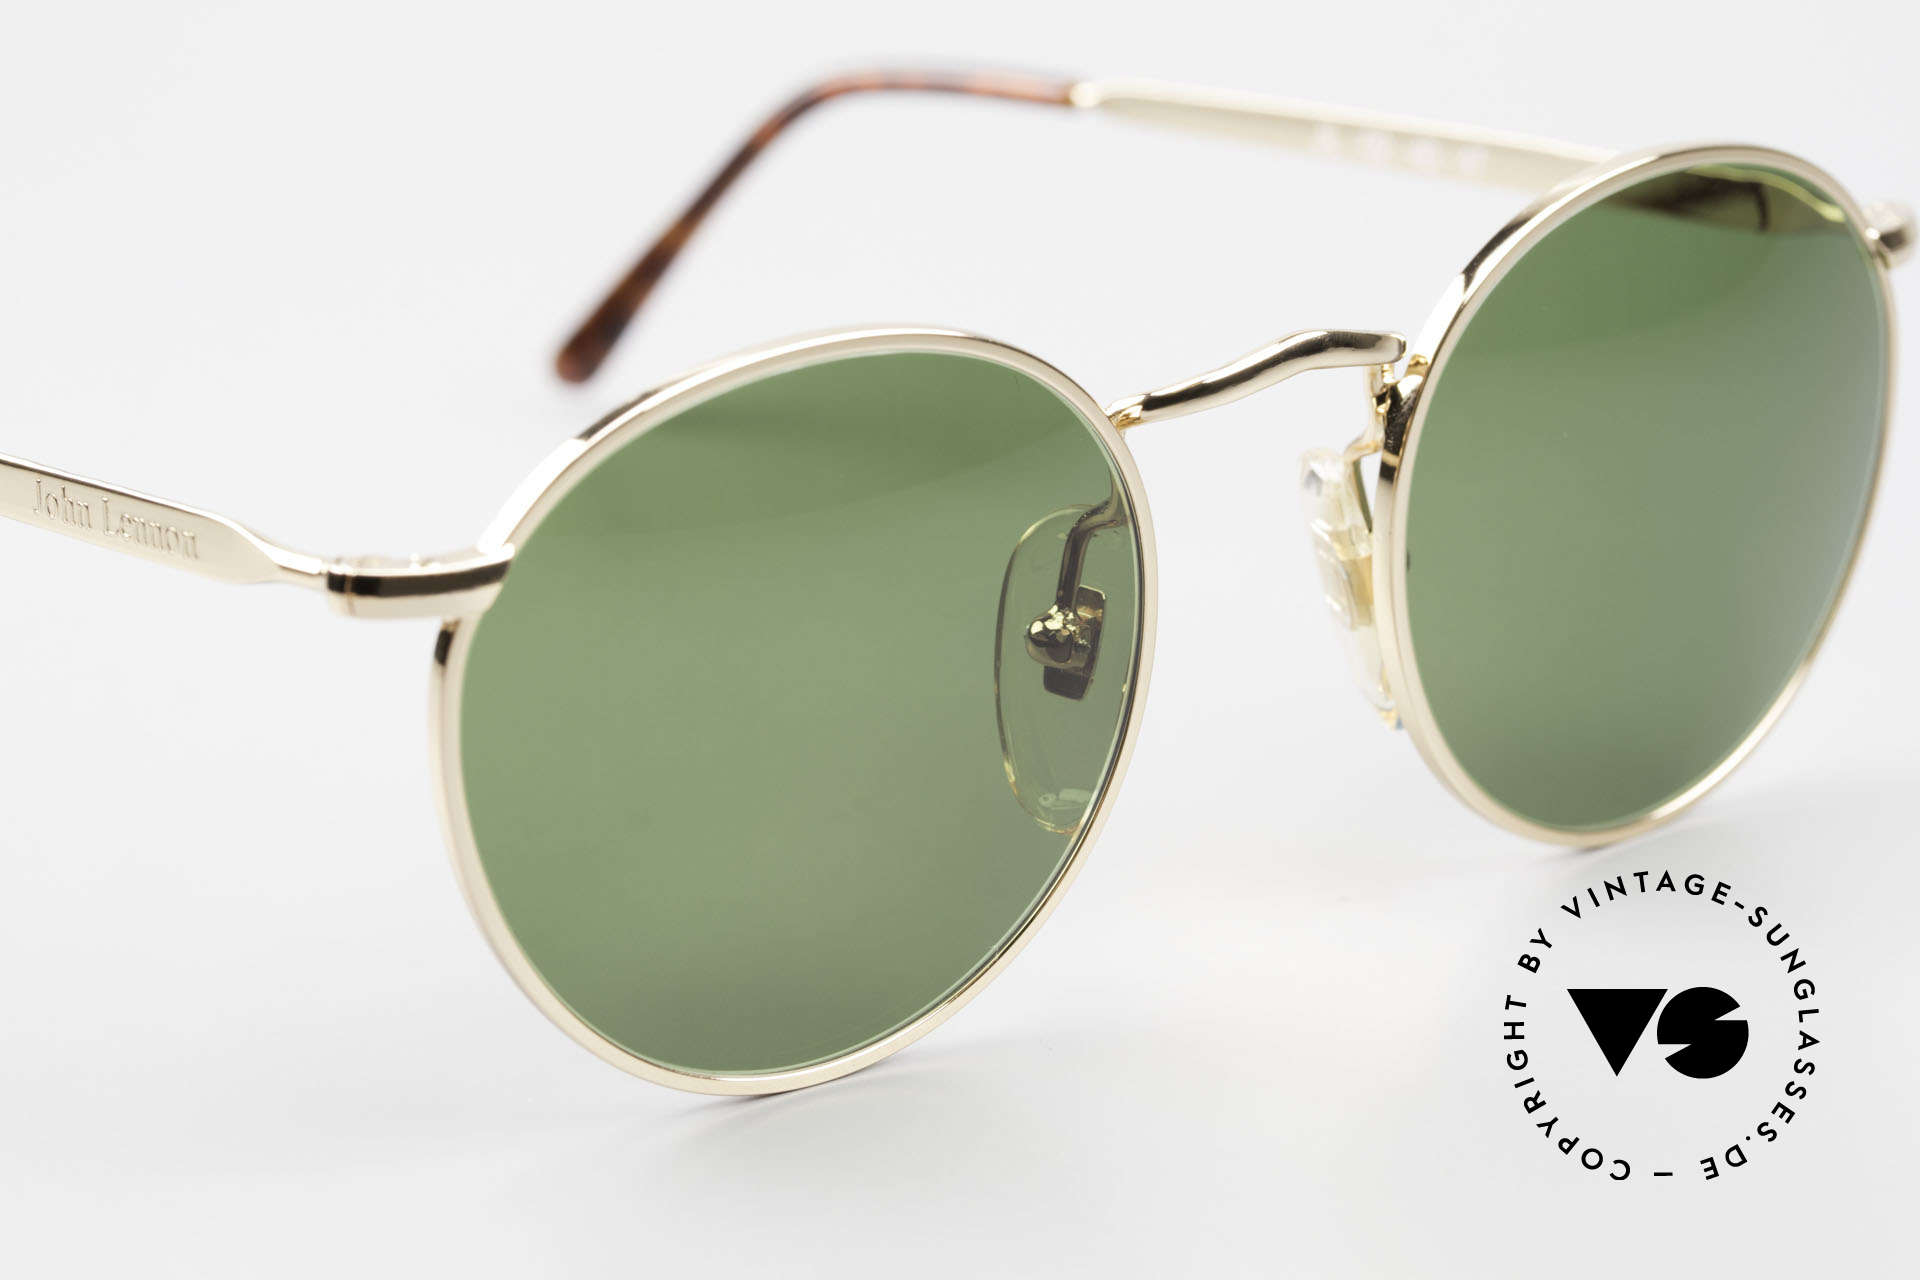 Sunglasses John Lennon - The Dreamer Original JL Collection Glasses